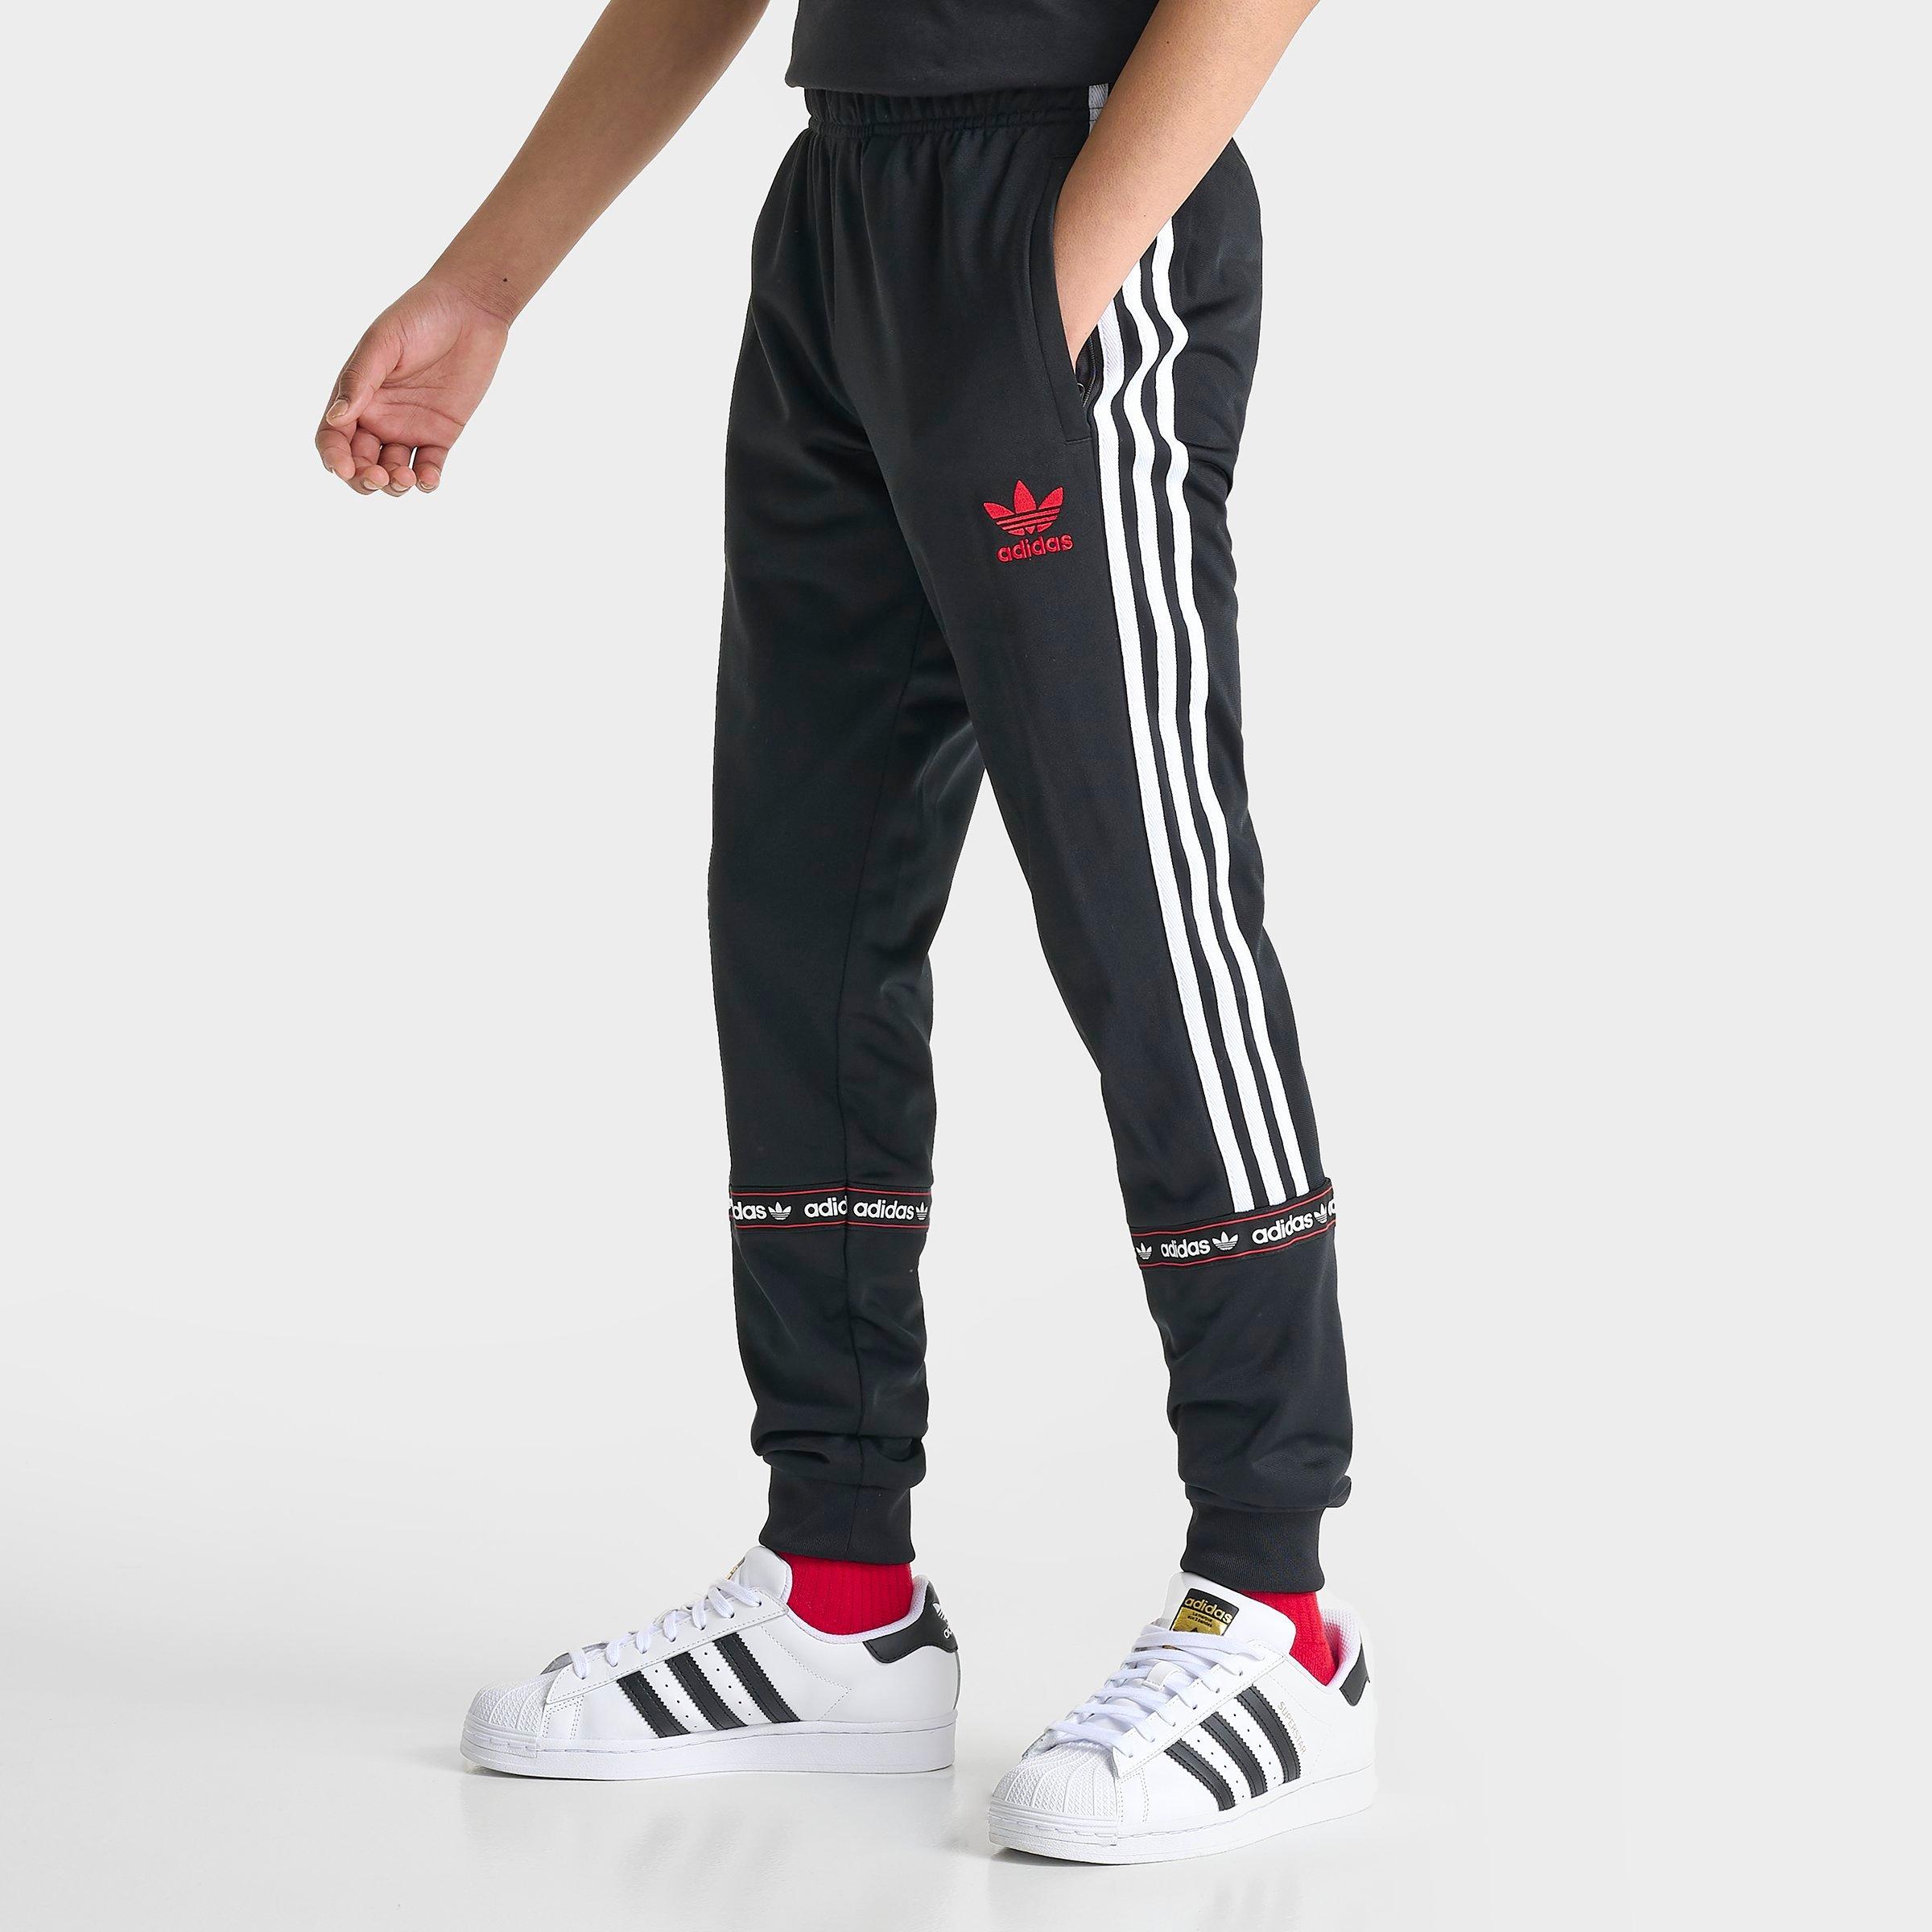 Adidas Originals Adidas Kids' Originals Tape Jogger Pants In Black/white/red